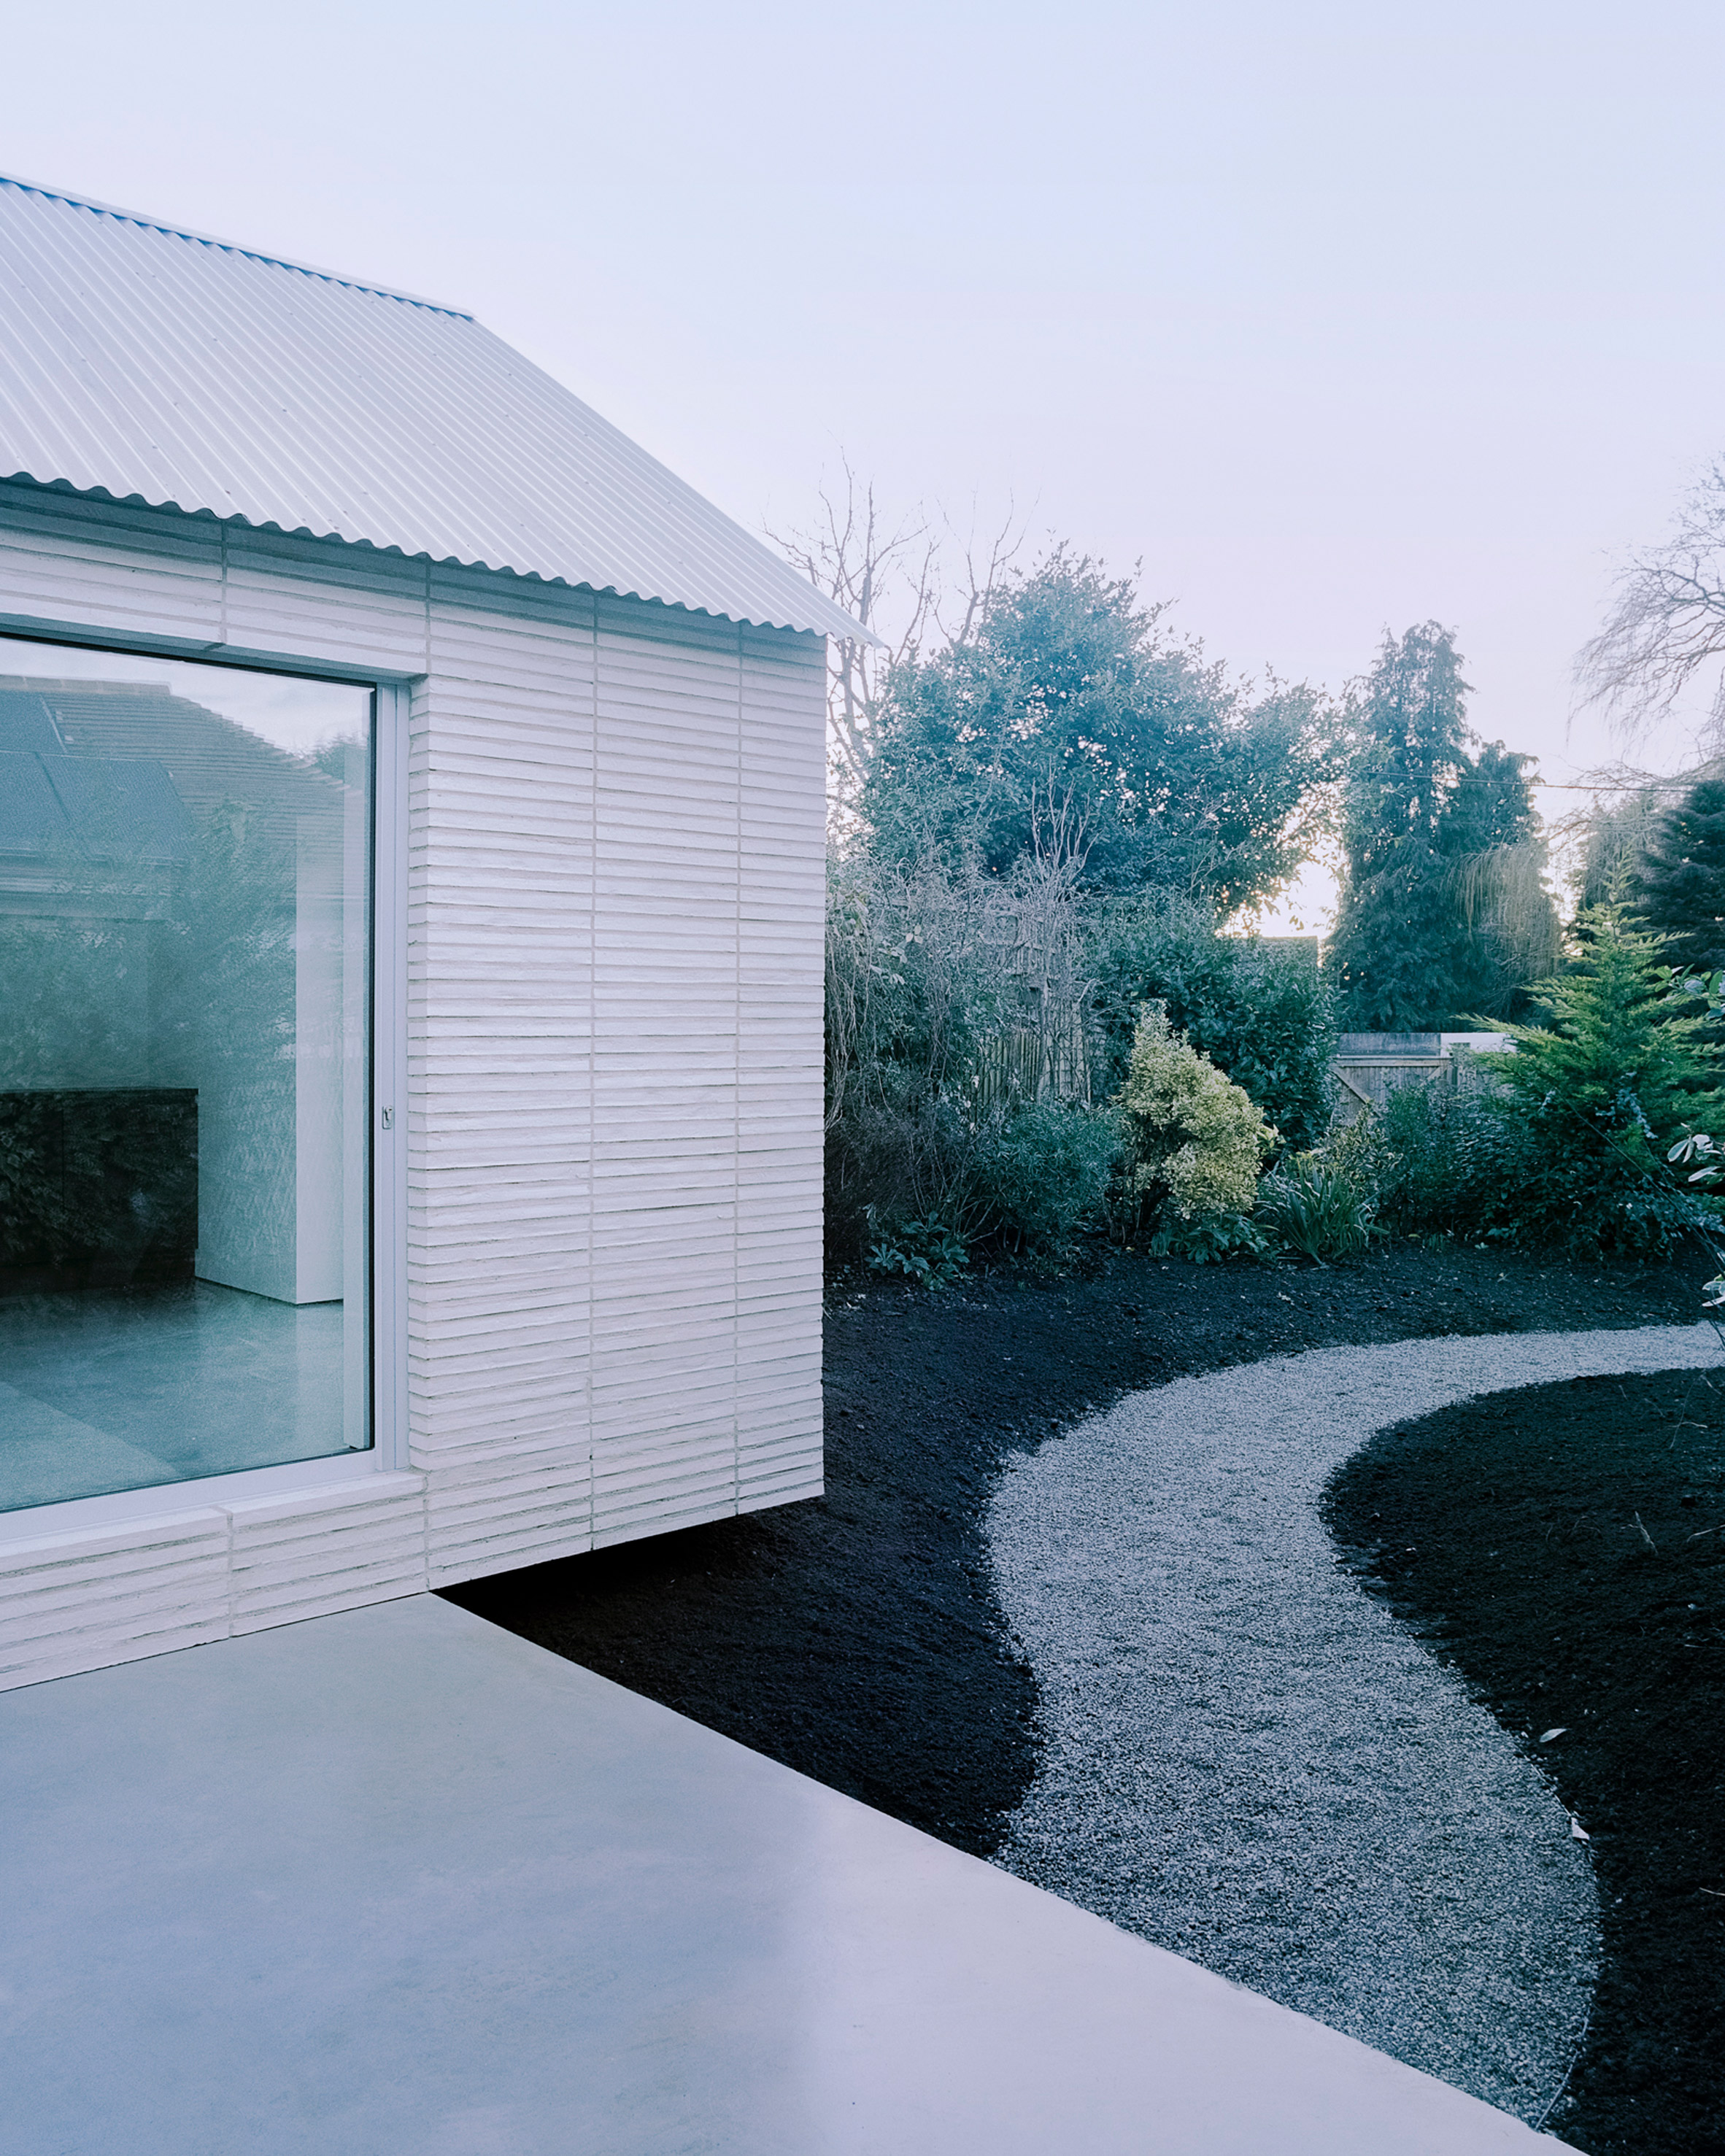 Over The Edge minimalist house by Jonathan Burlow garden